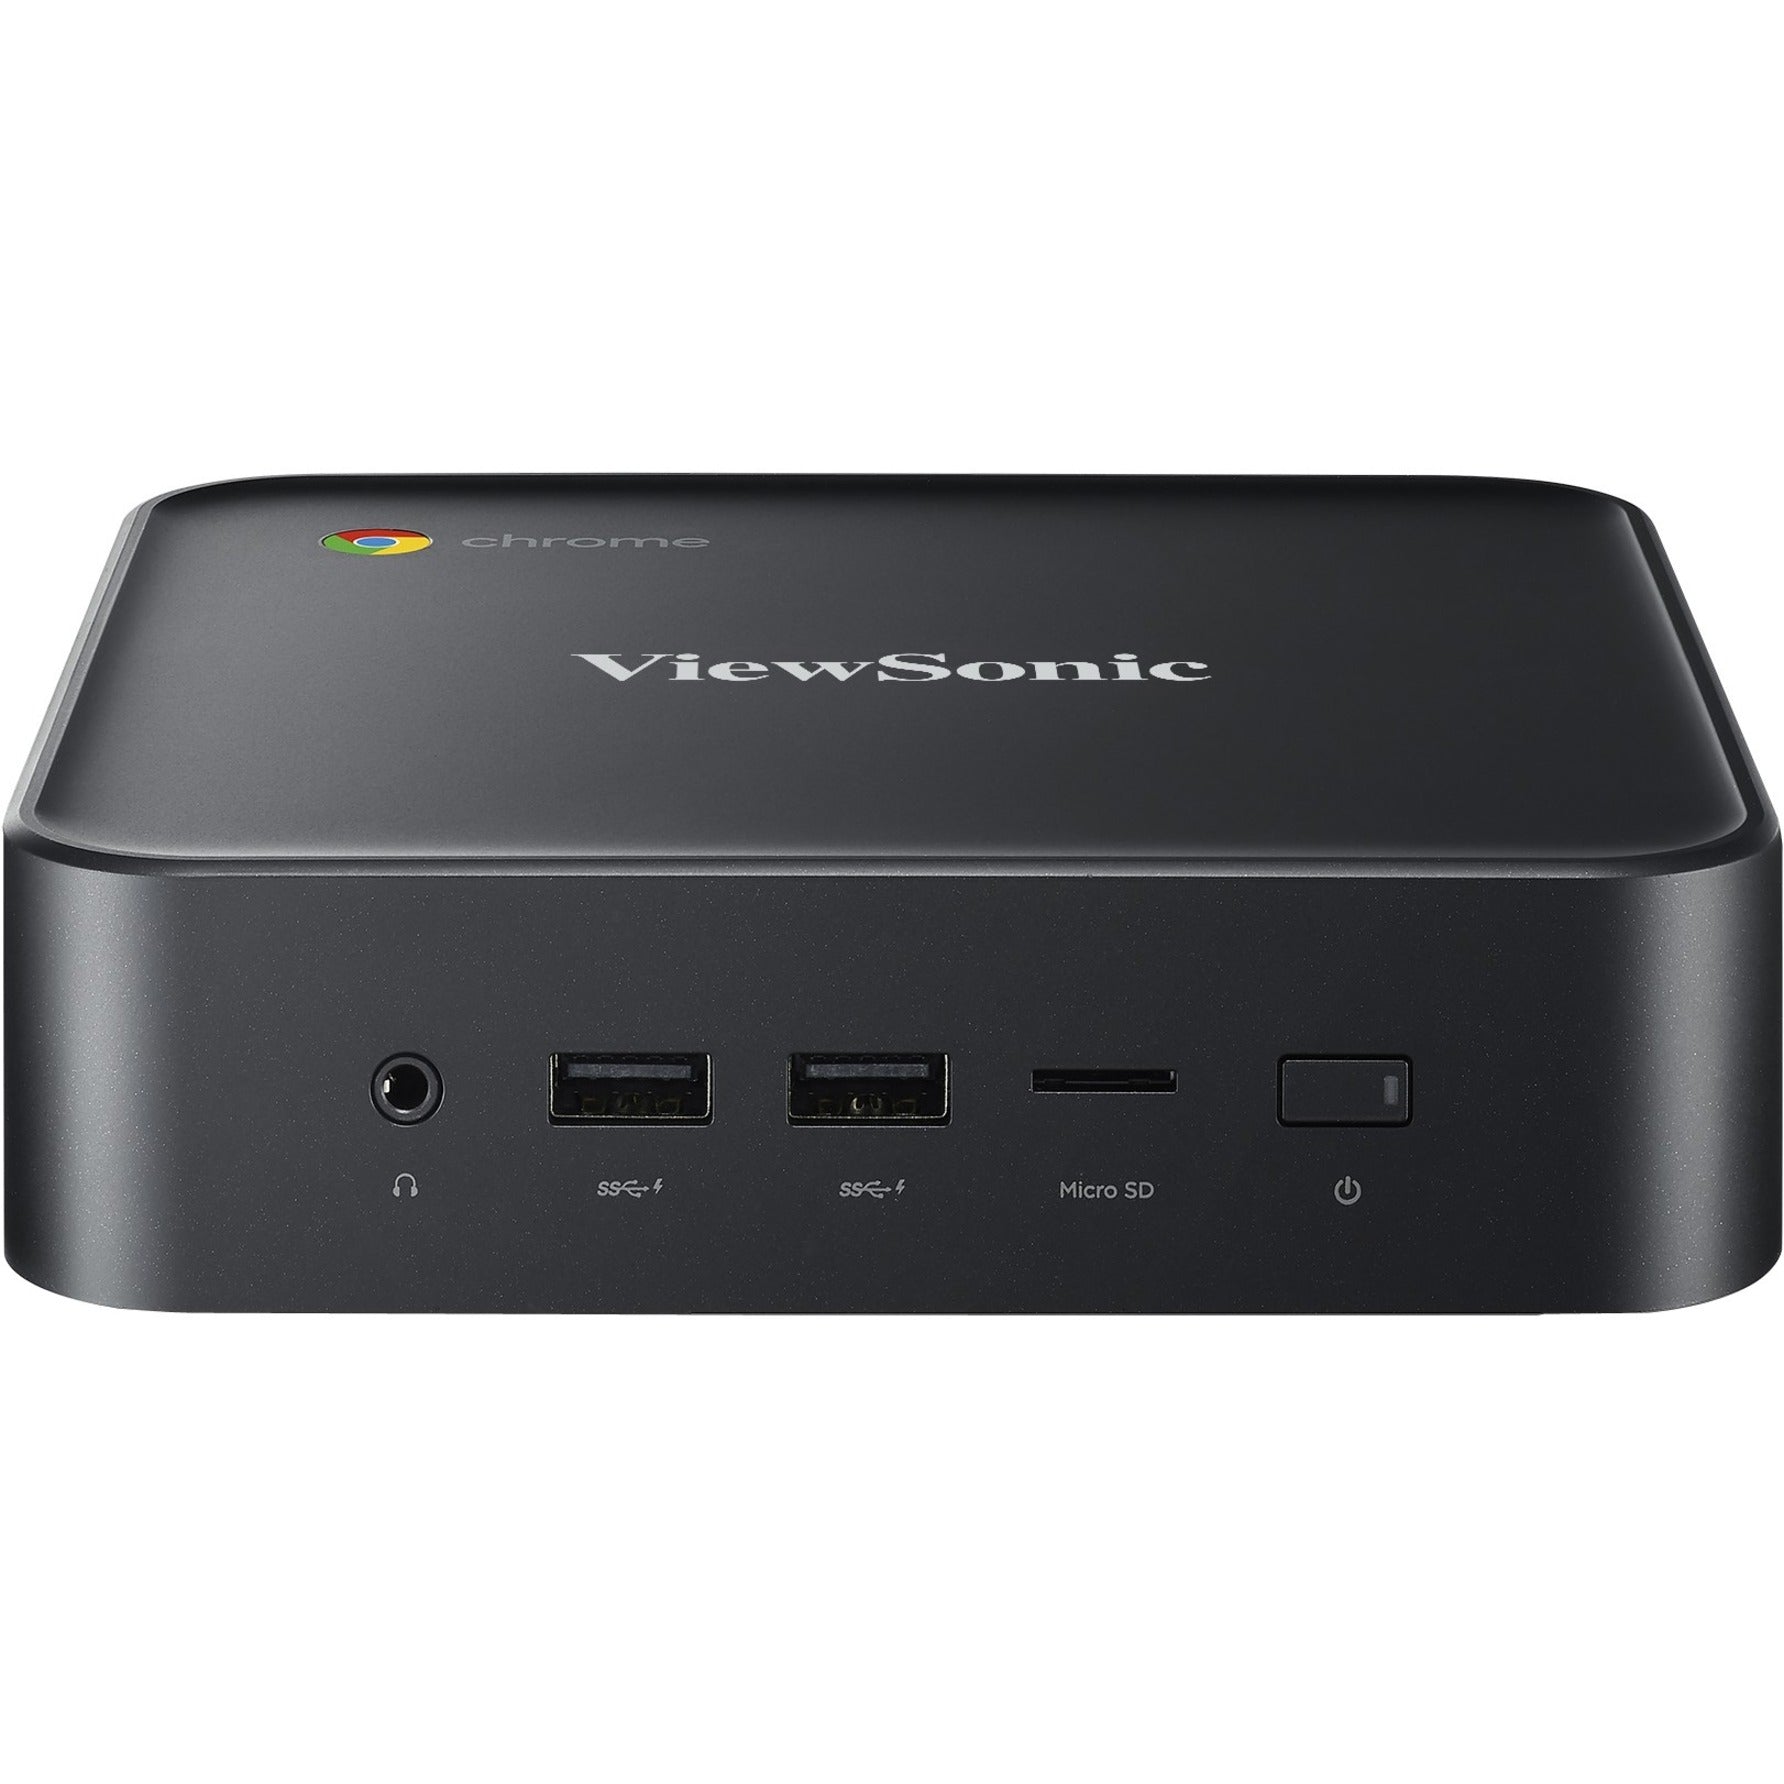 ViewSonic NMP760 Chromebox, Intel Celeron 5205U 1.9GHz, 8GB DDR4, 64GB SSD, Chrome OS, Google Play Store, Built-in Security